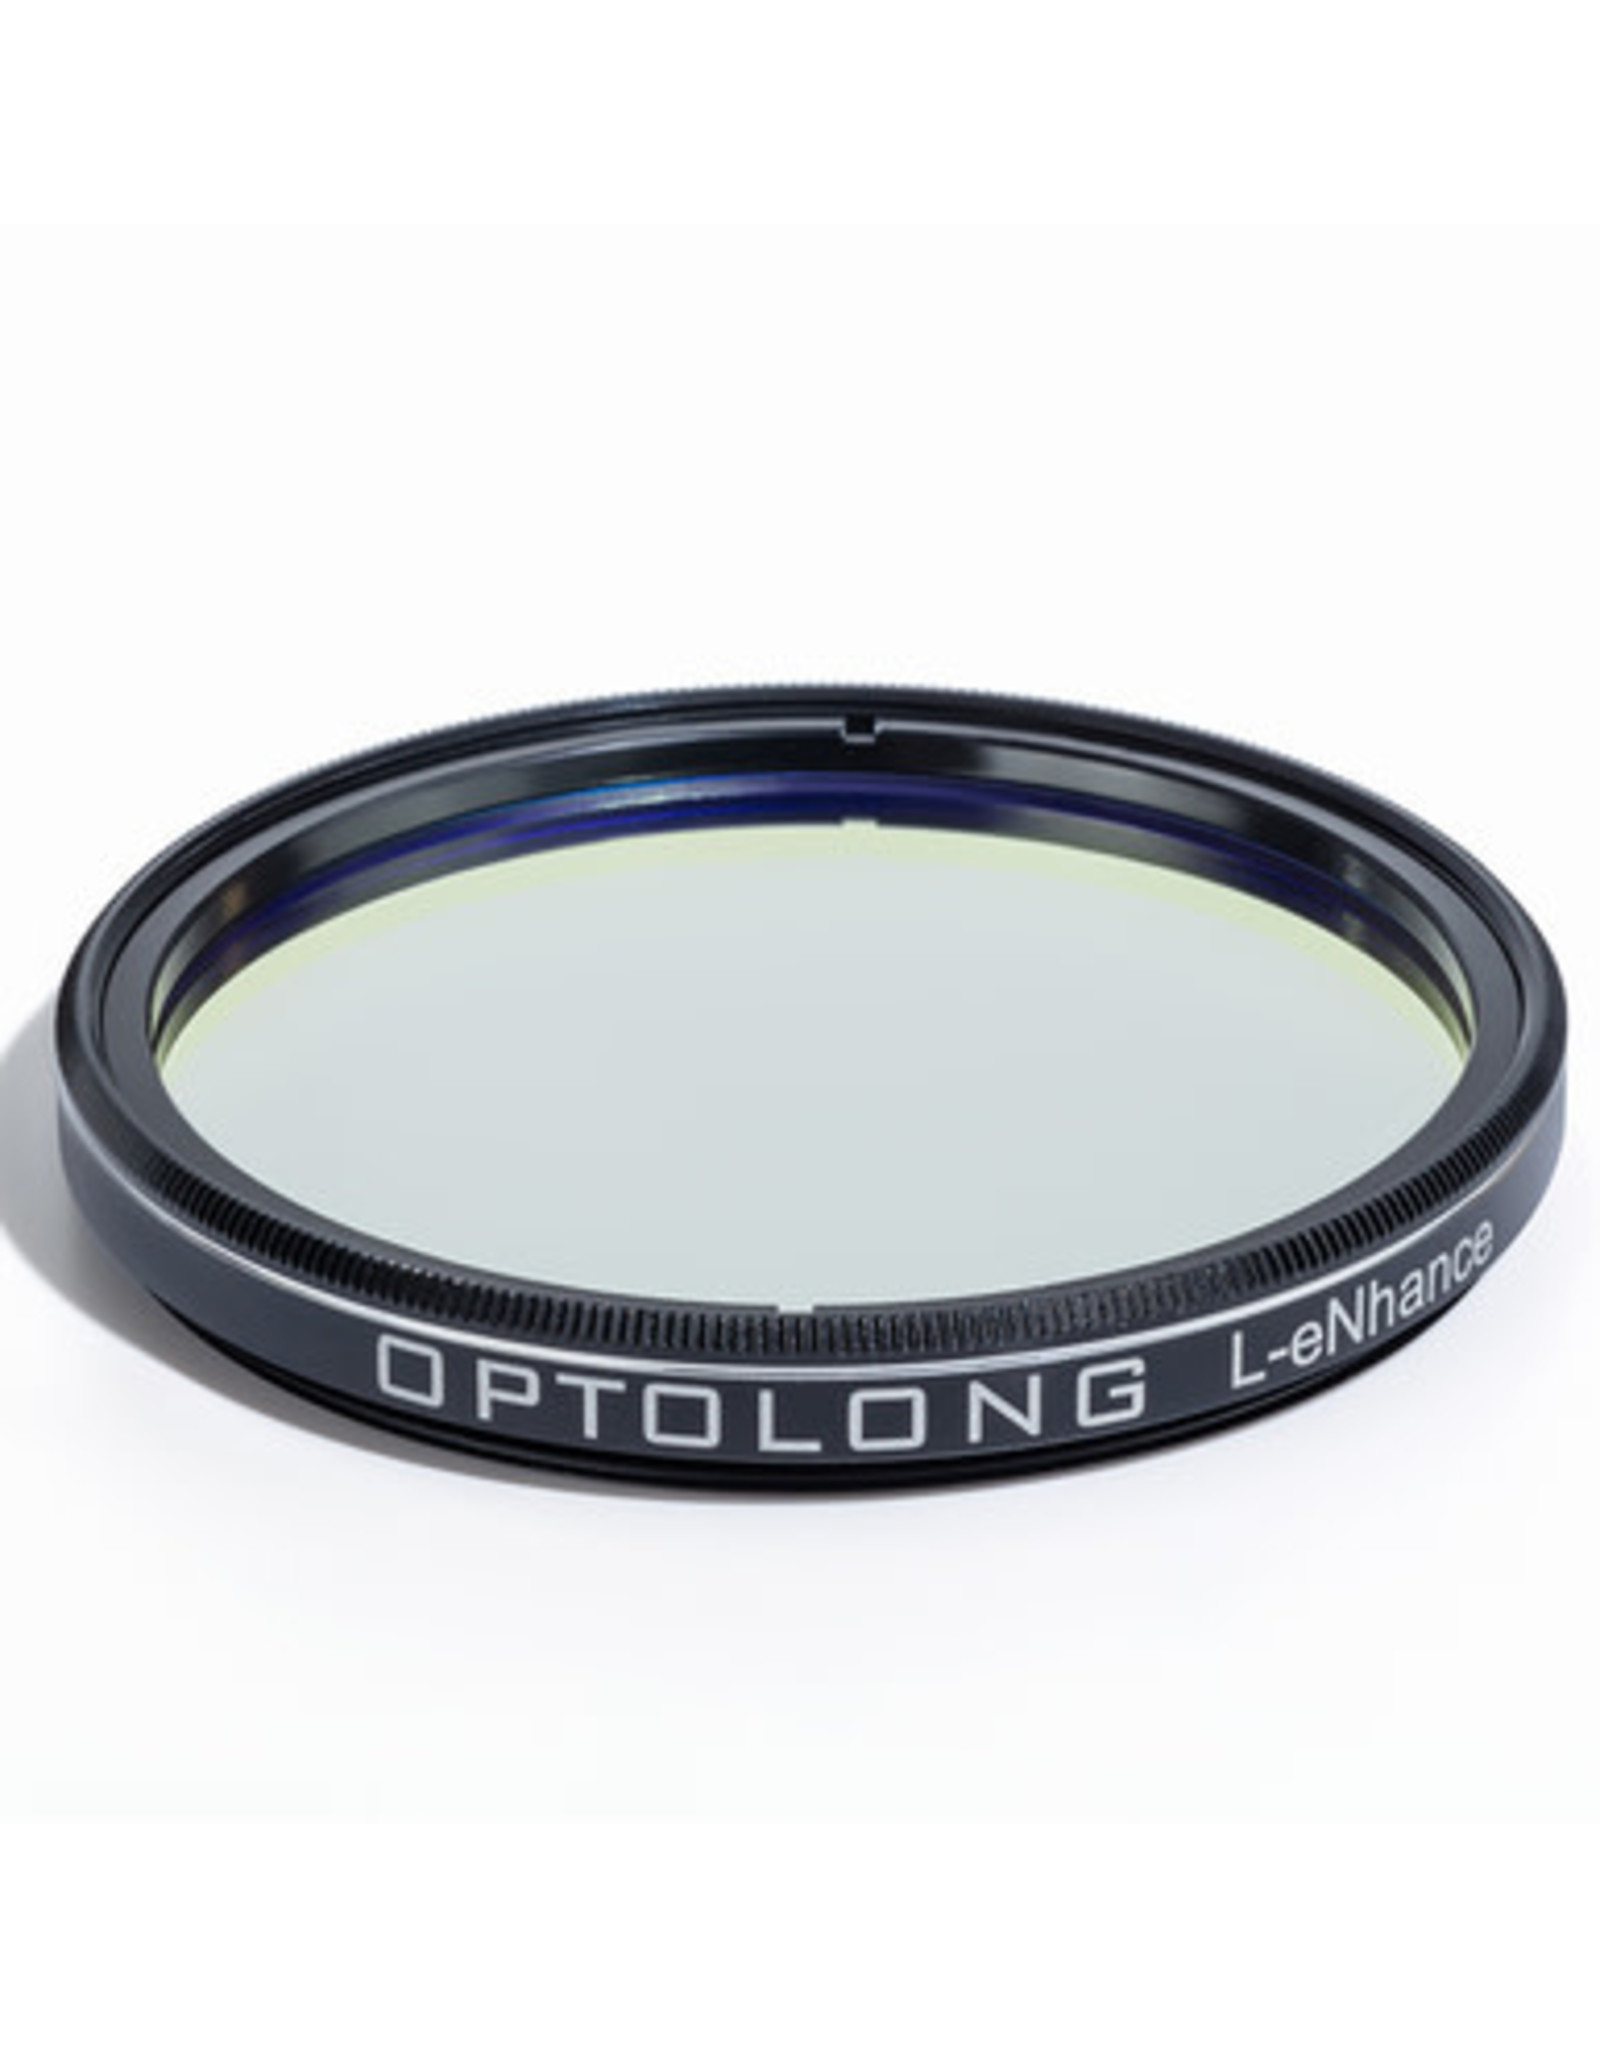 Optolong Optolong L-eNhance Light Pollution Dual Band Pass Imaging Filter - 1.25" Mounted